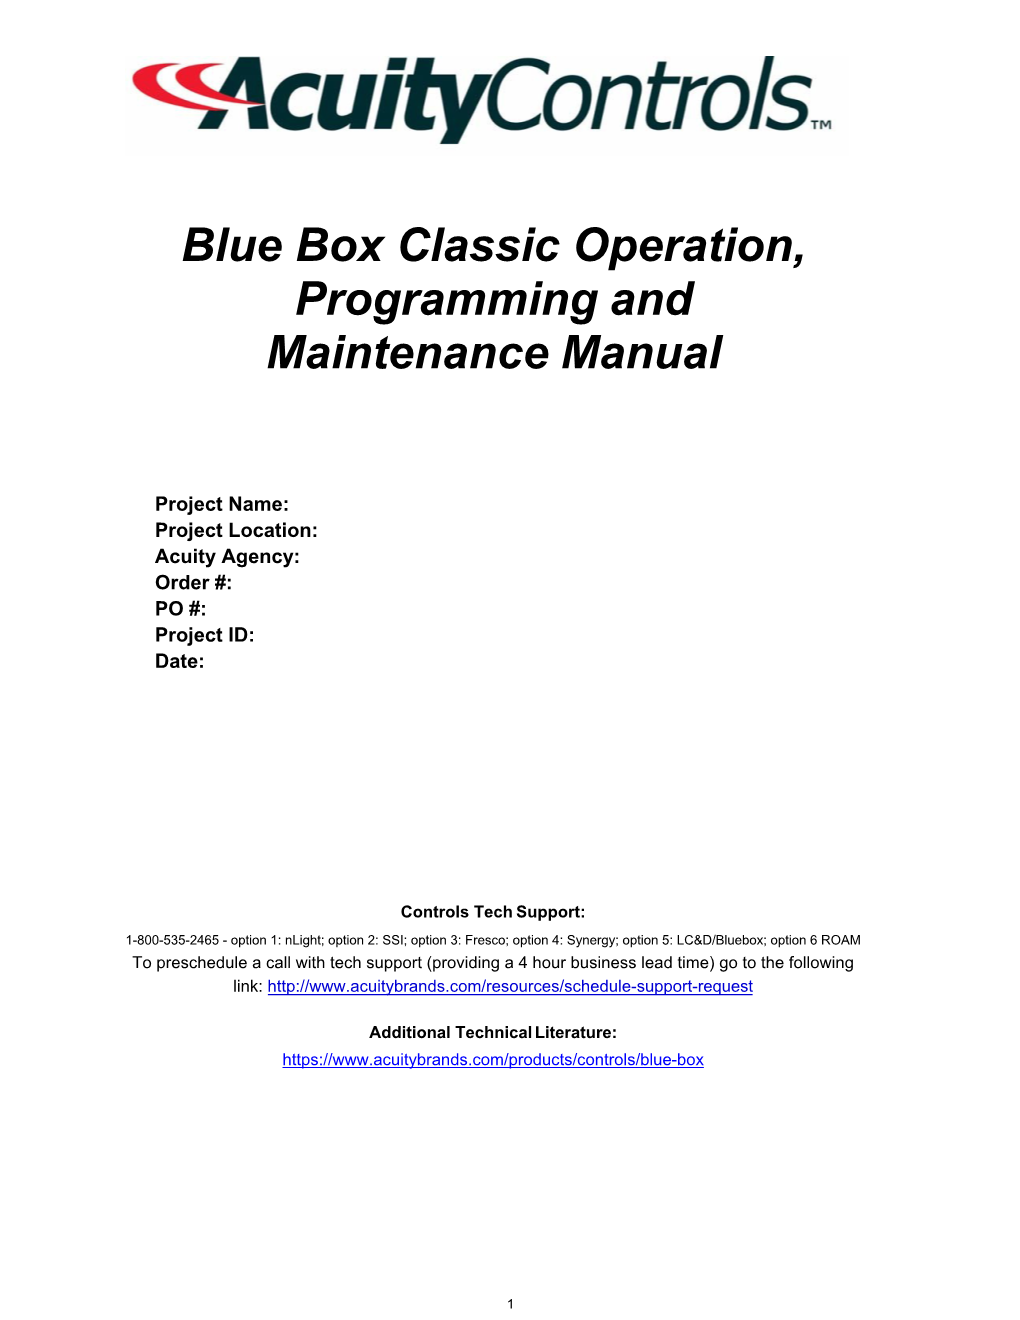 Blue Box Classic Operation, Programming and Maintenance Manual